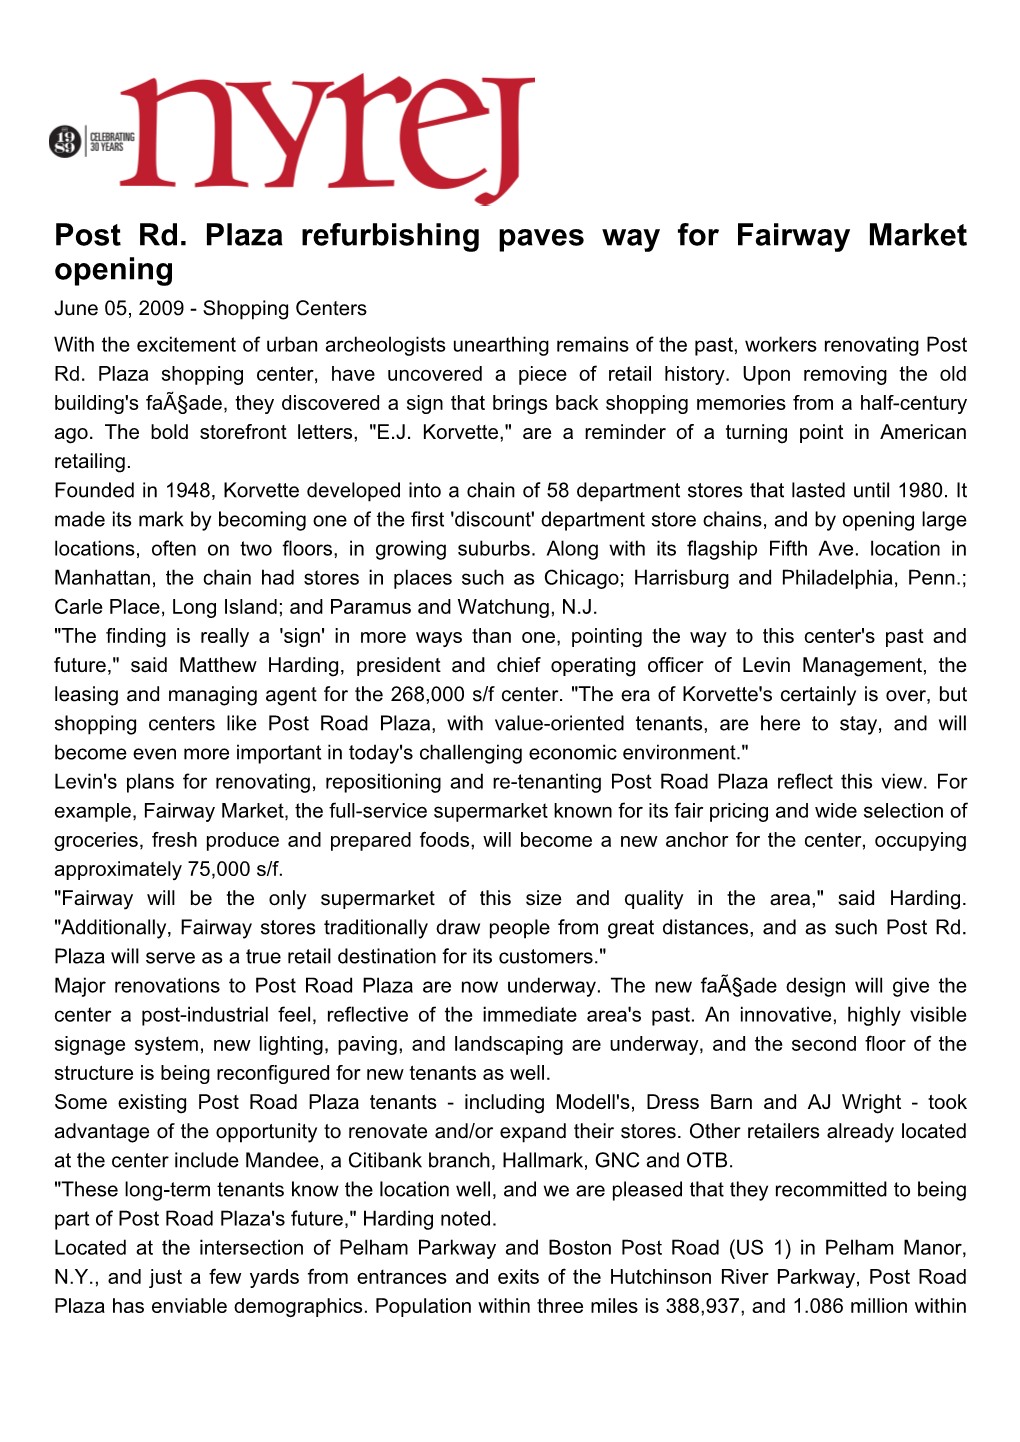 Post Rd. Plaza Refurbishing Paves Way for Fairway Market Opening